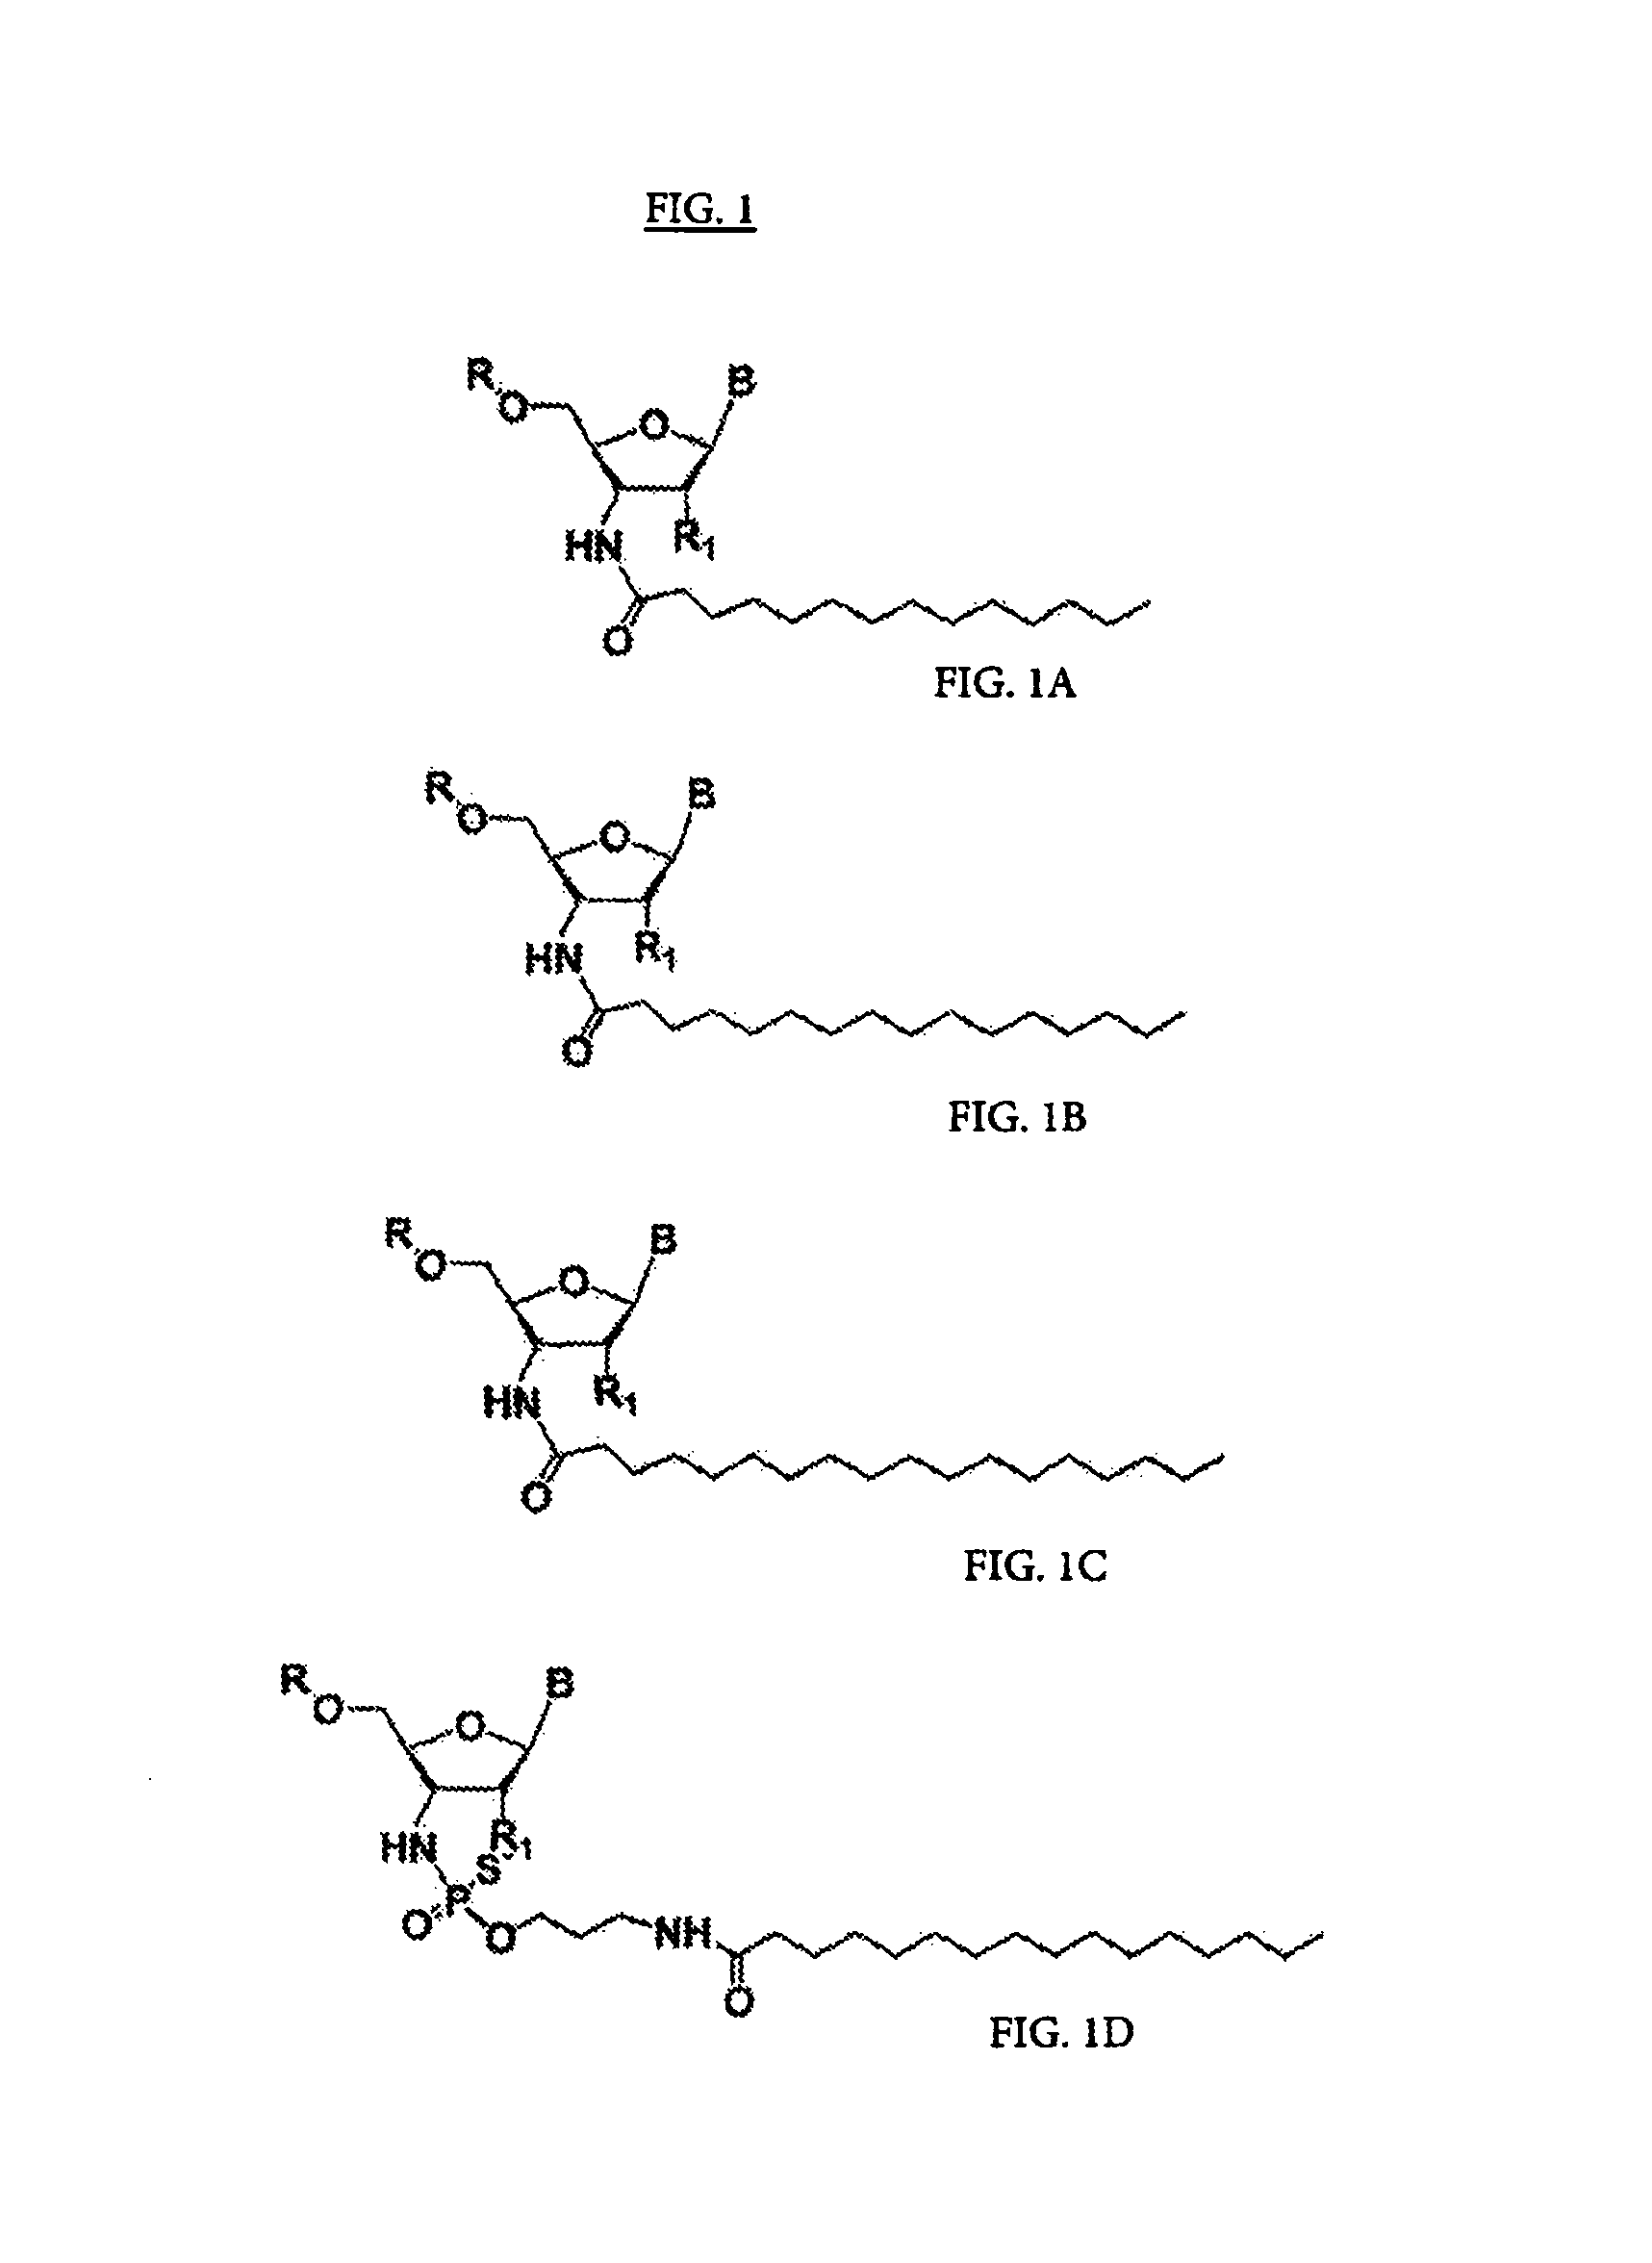 RNA amidates and thioamidates for RNAi